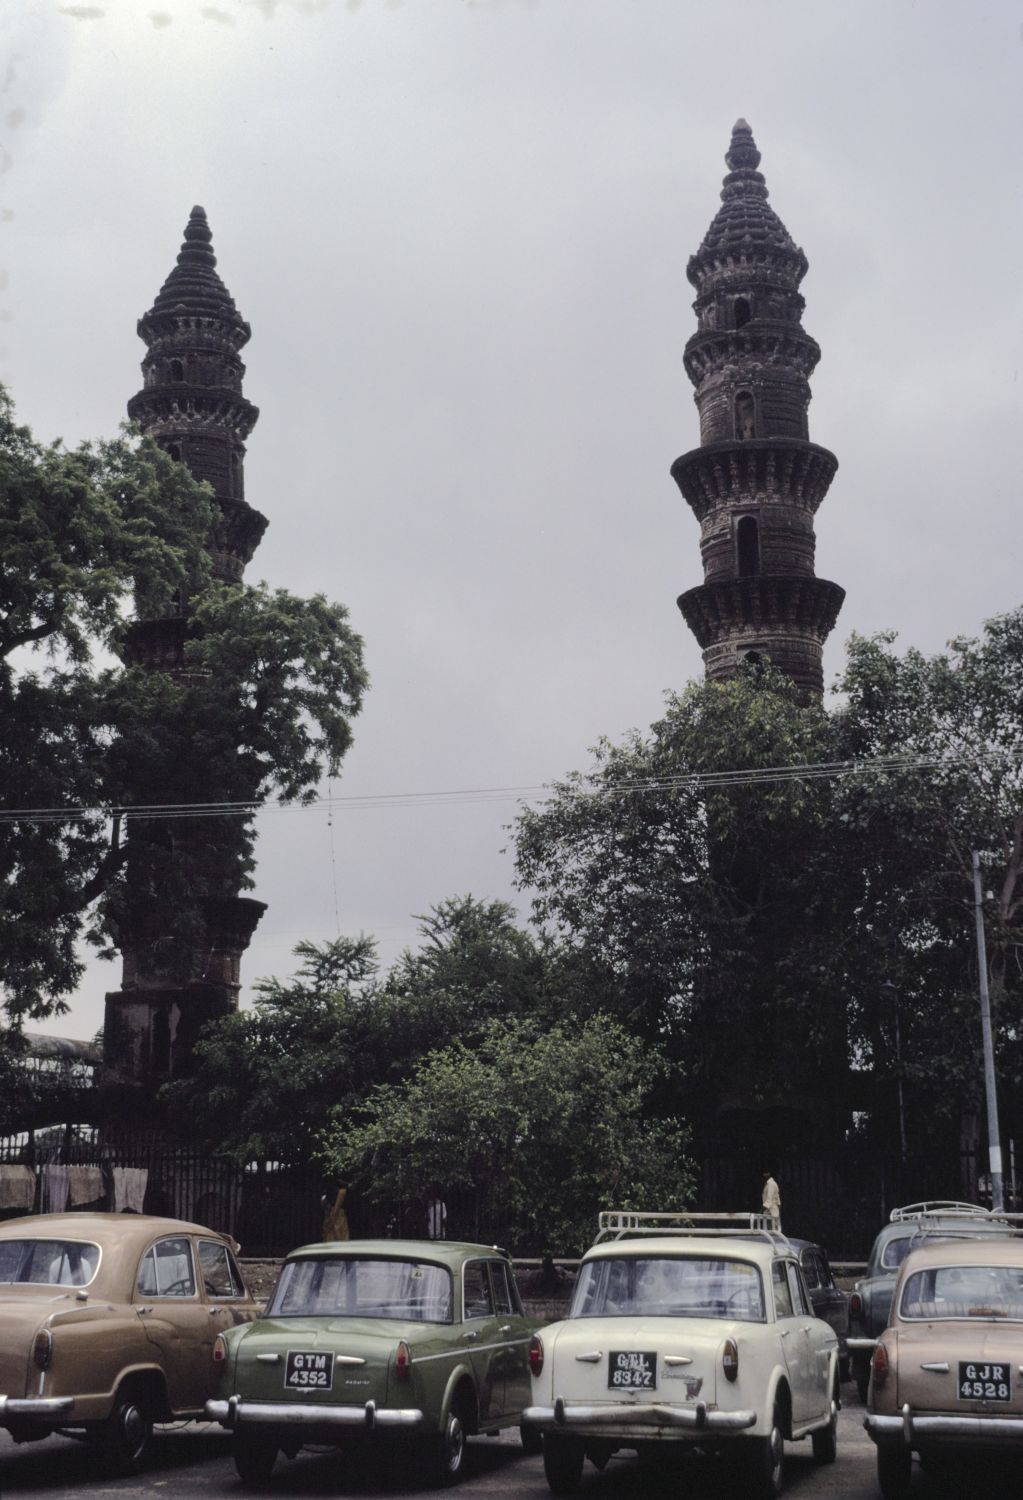 Distant view of minarets.